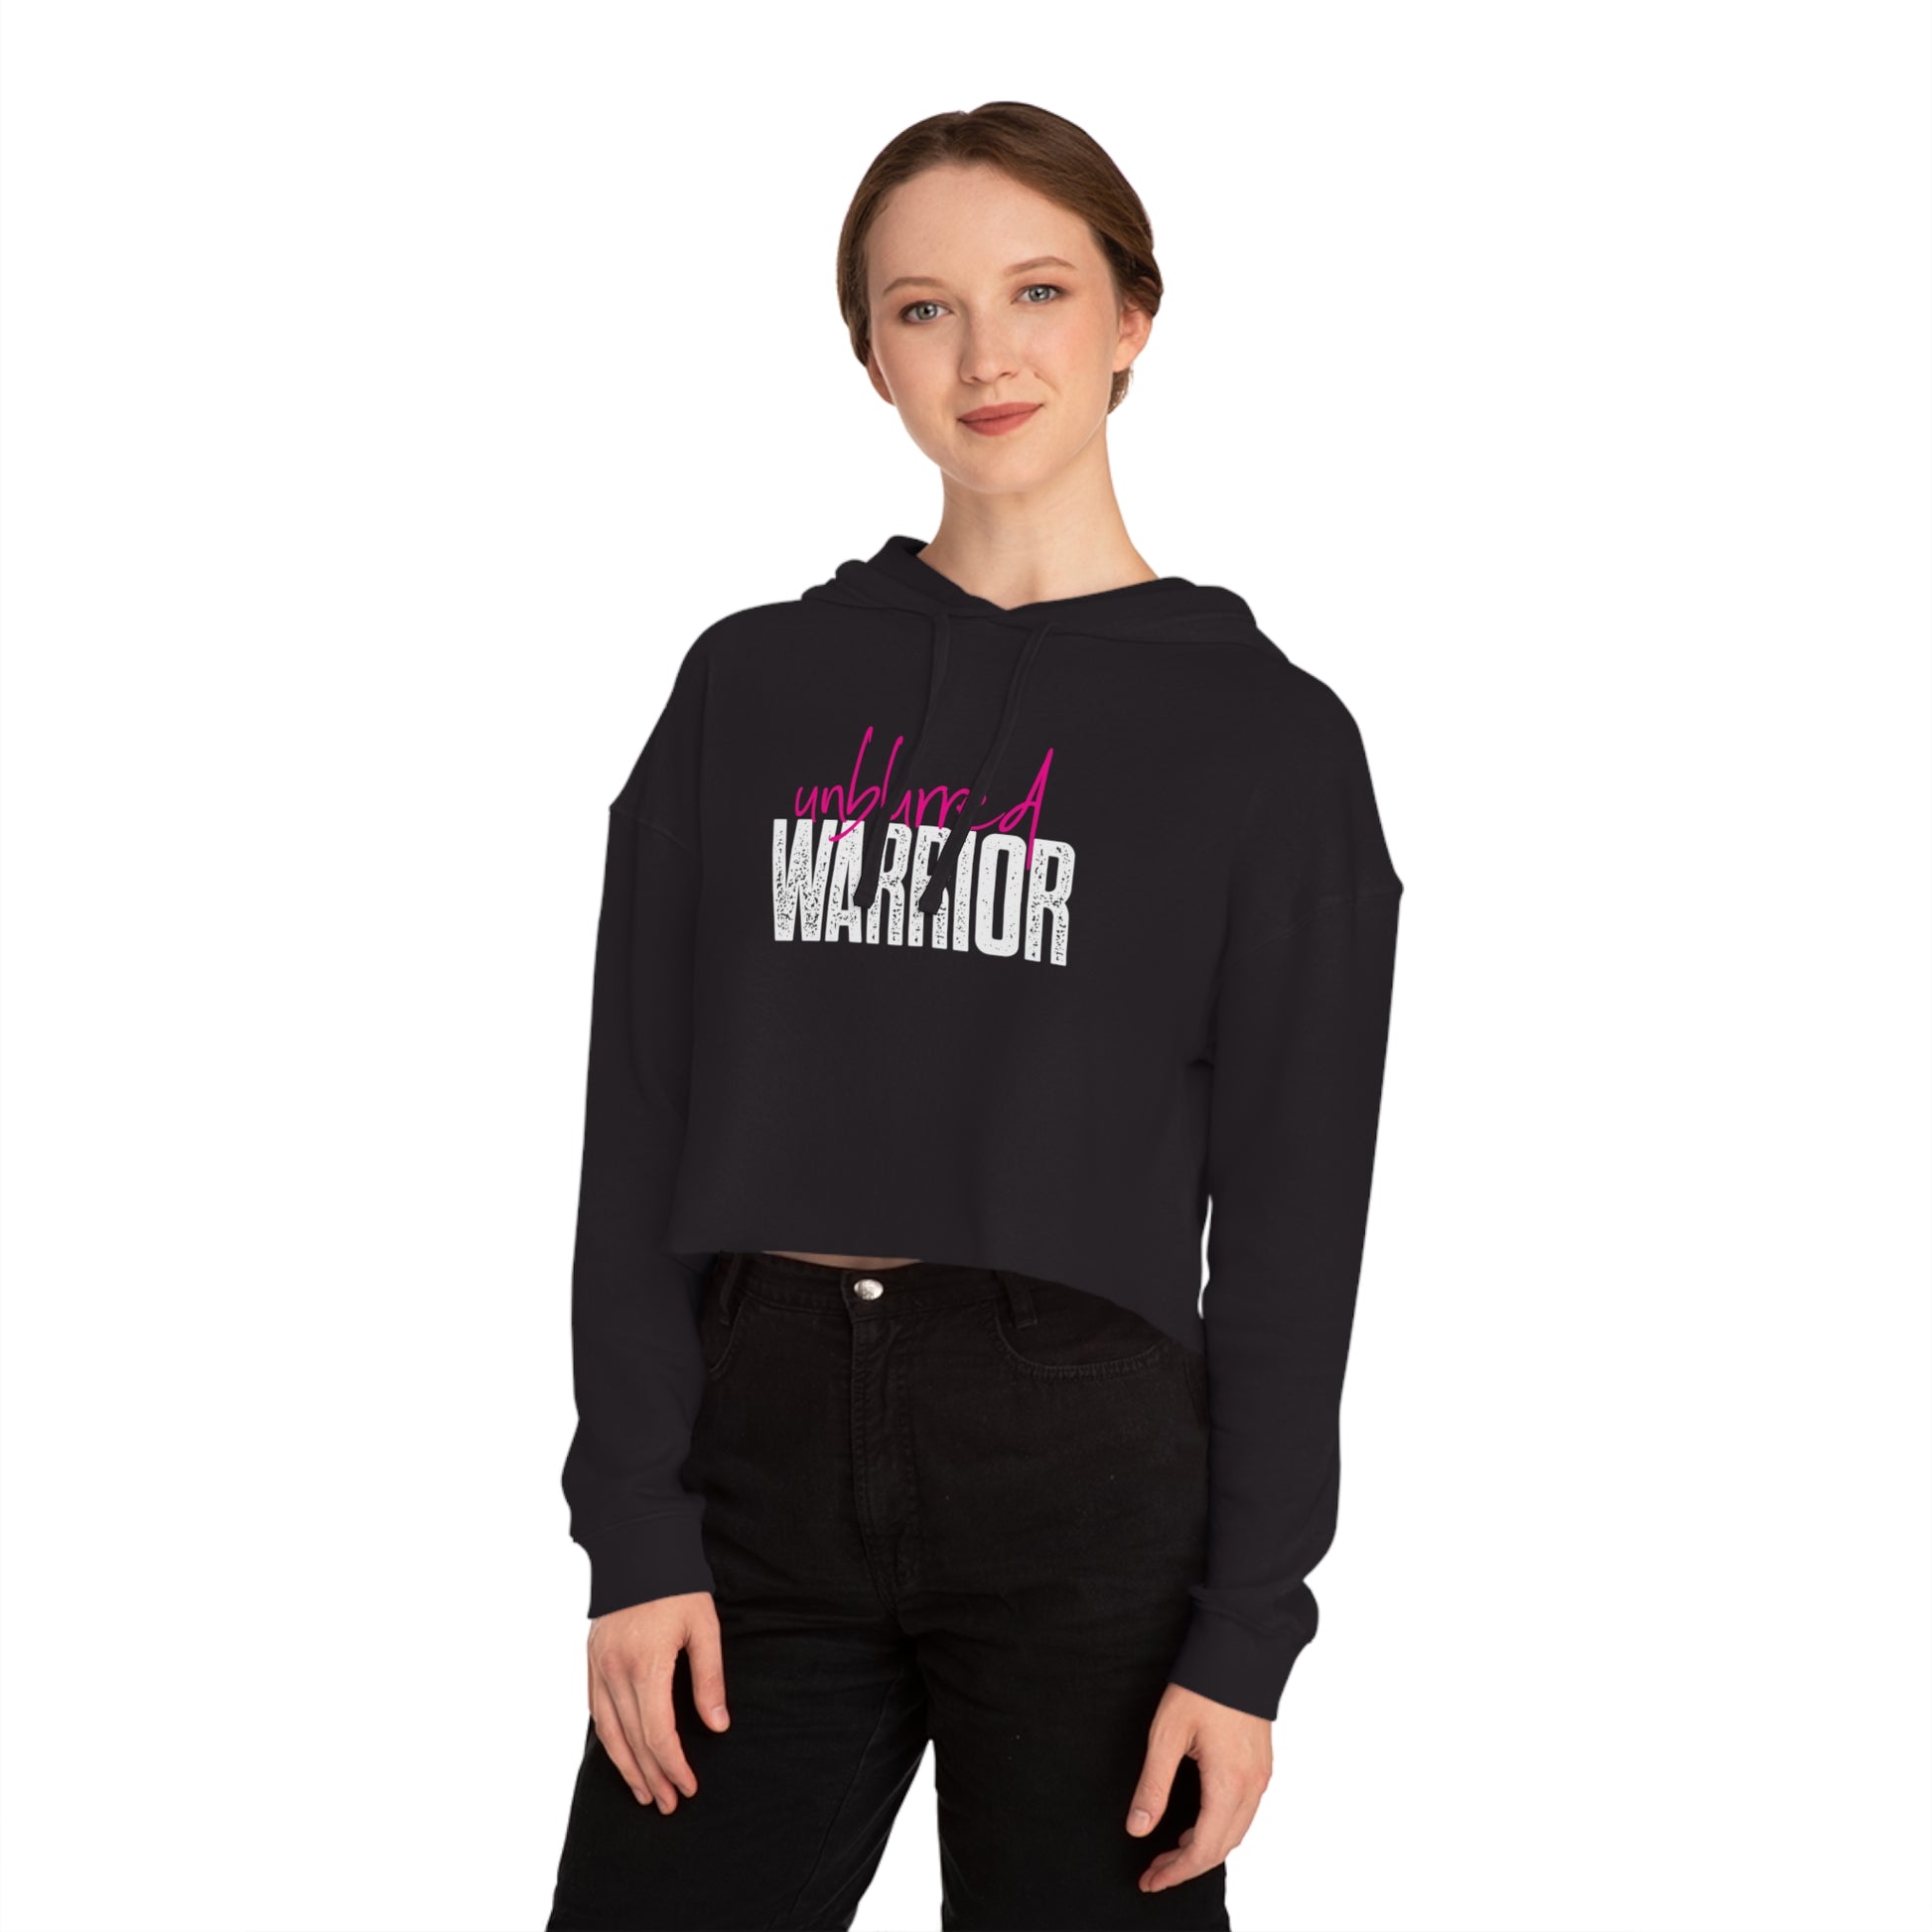 Unblurred Warrior w/ pink -Women’s Cropped Hooded Sweatshirt